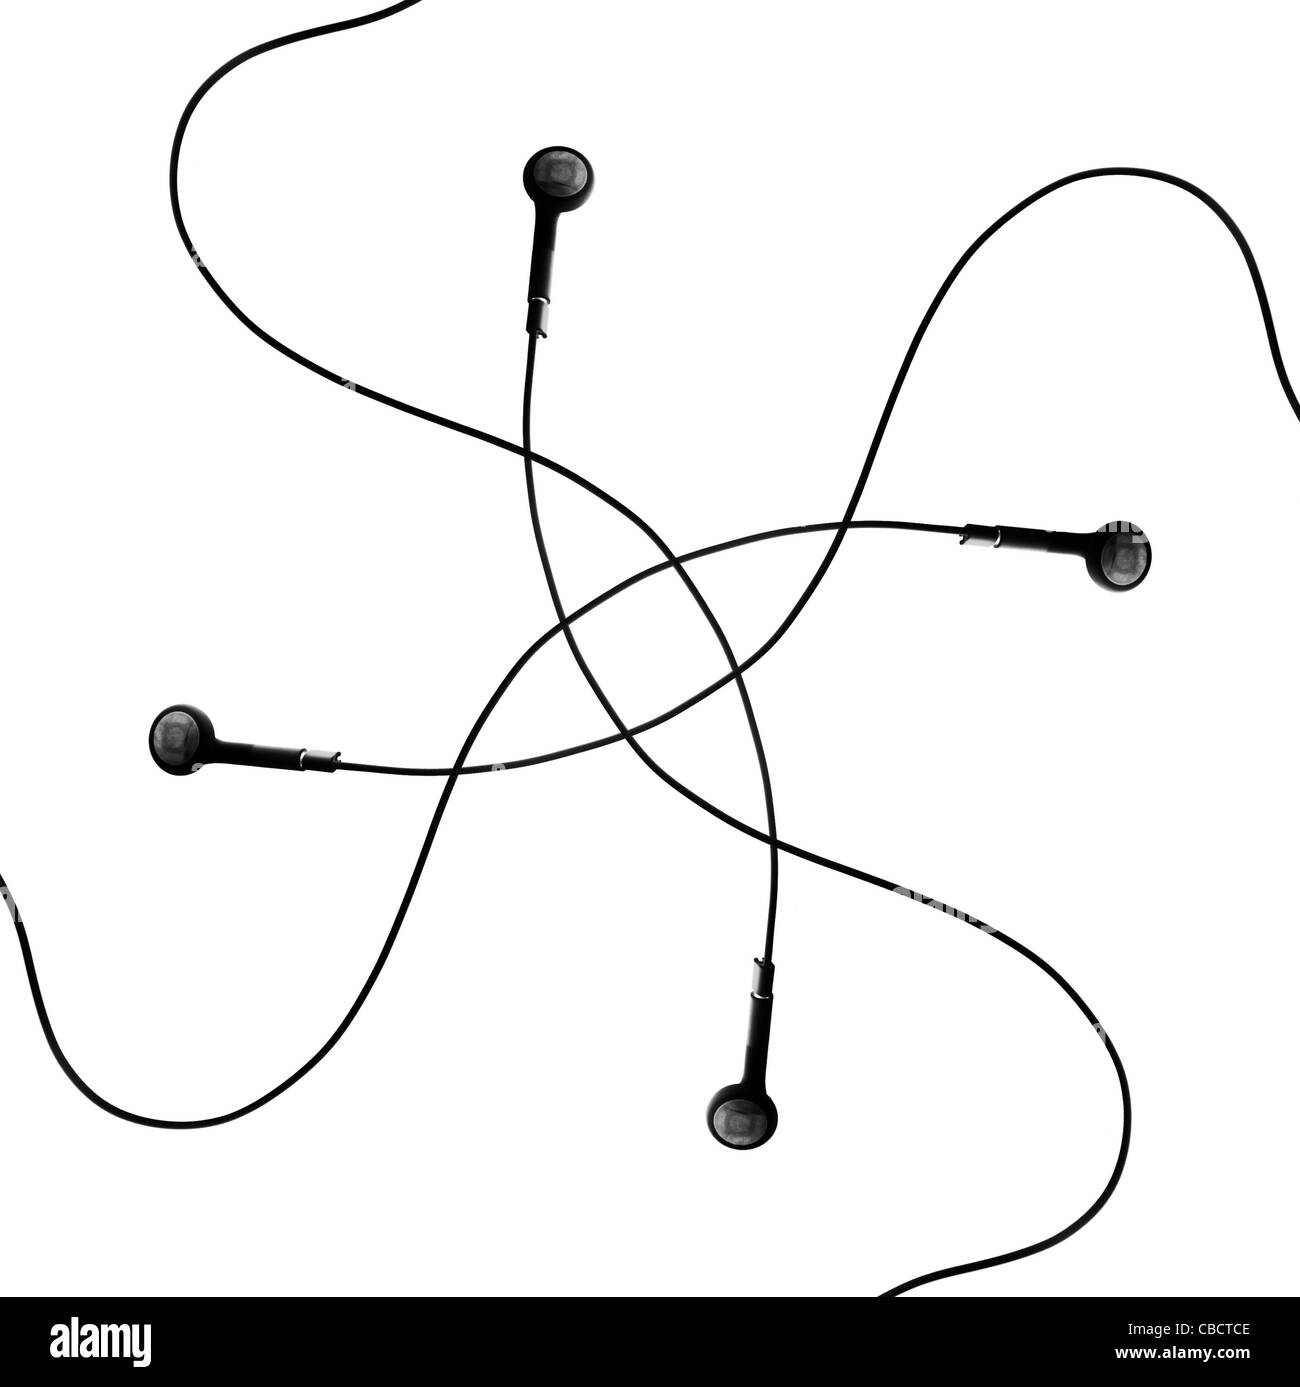 apple earphones in an abstract way Stock Photo